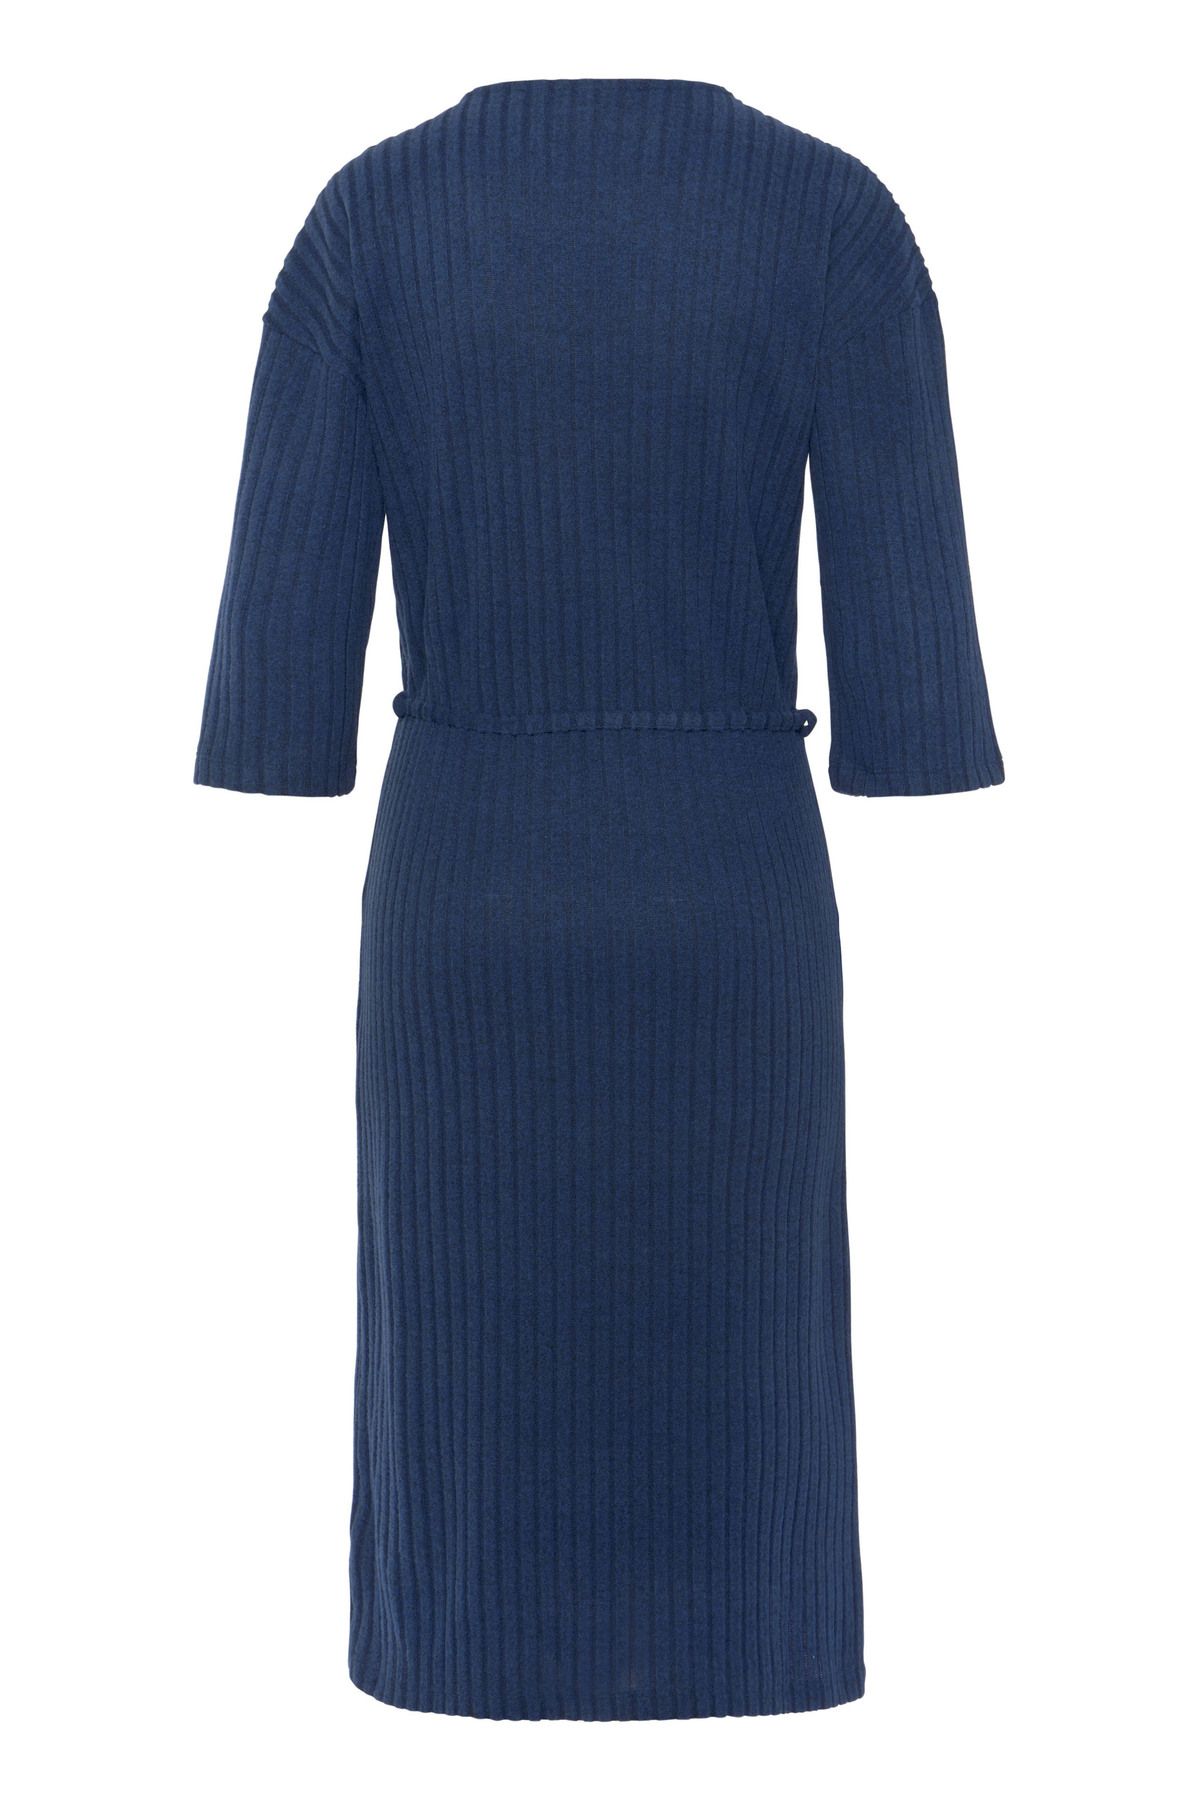 LASCANA Kleid - Blau - Basic - Trendyol | Strandkleider